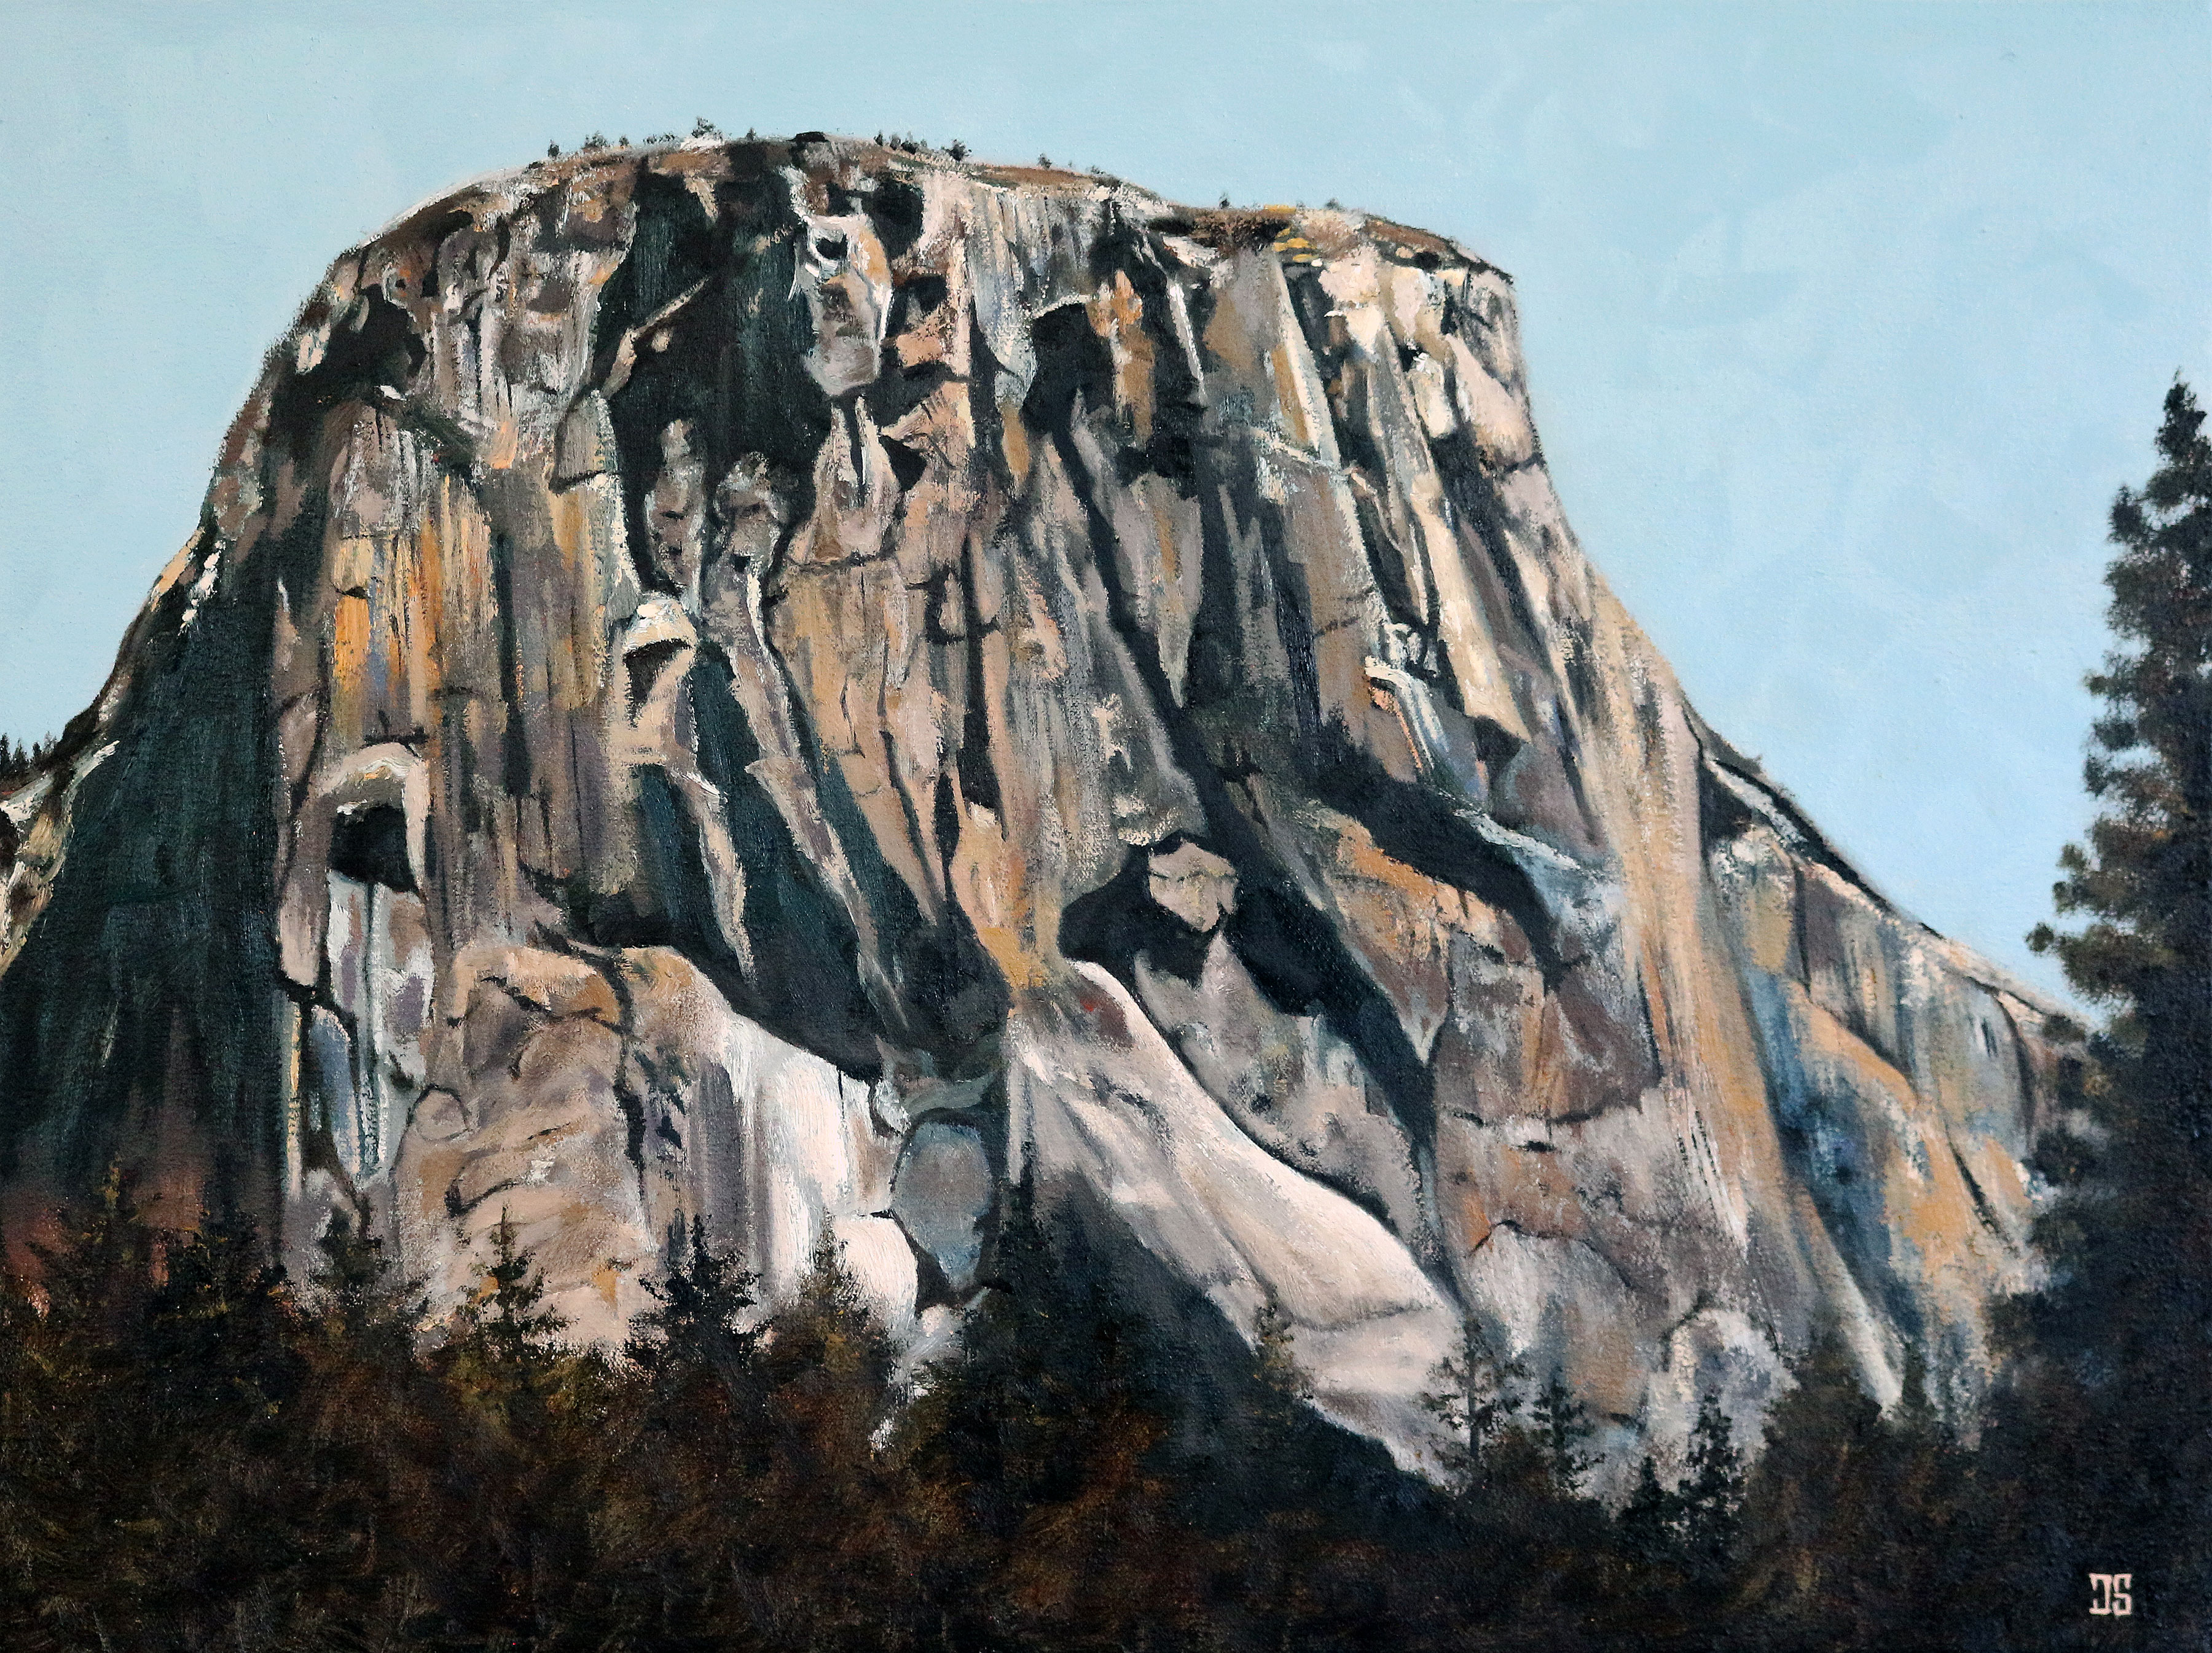 Oil painting "El Capitan, Yosemite National Park" by Jeffrey Dale Starr